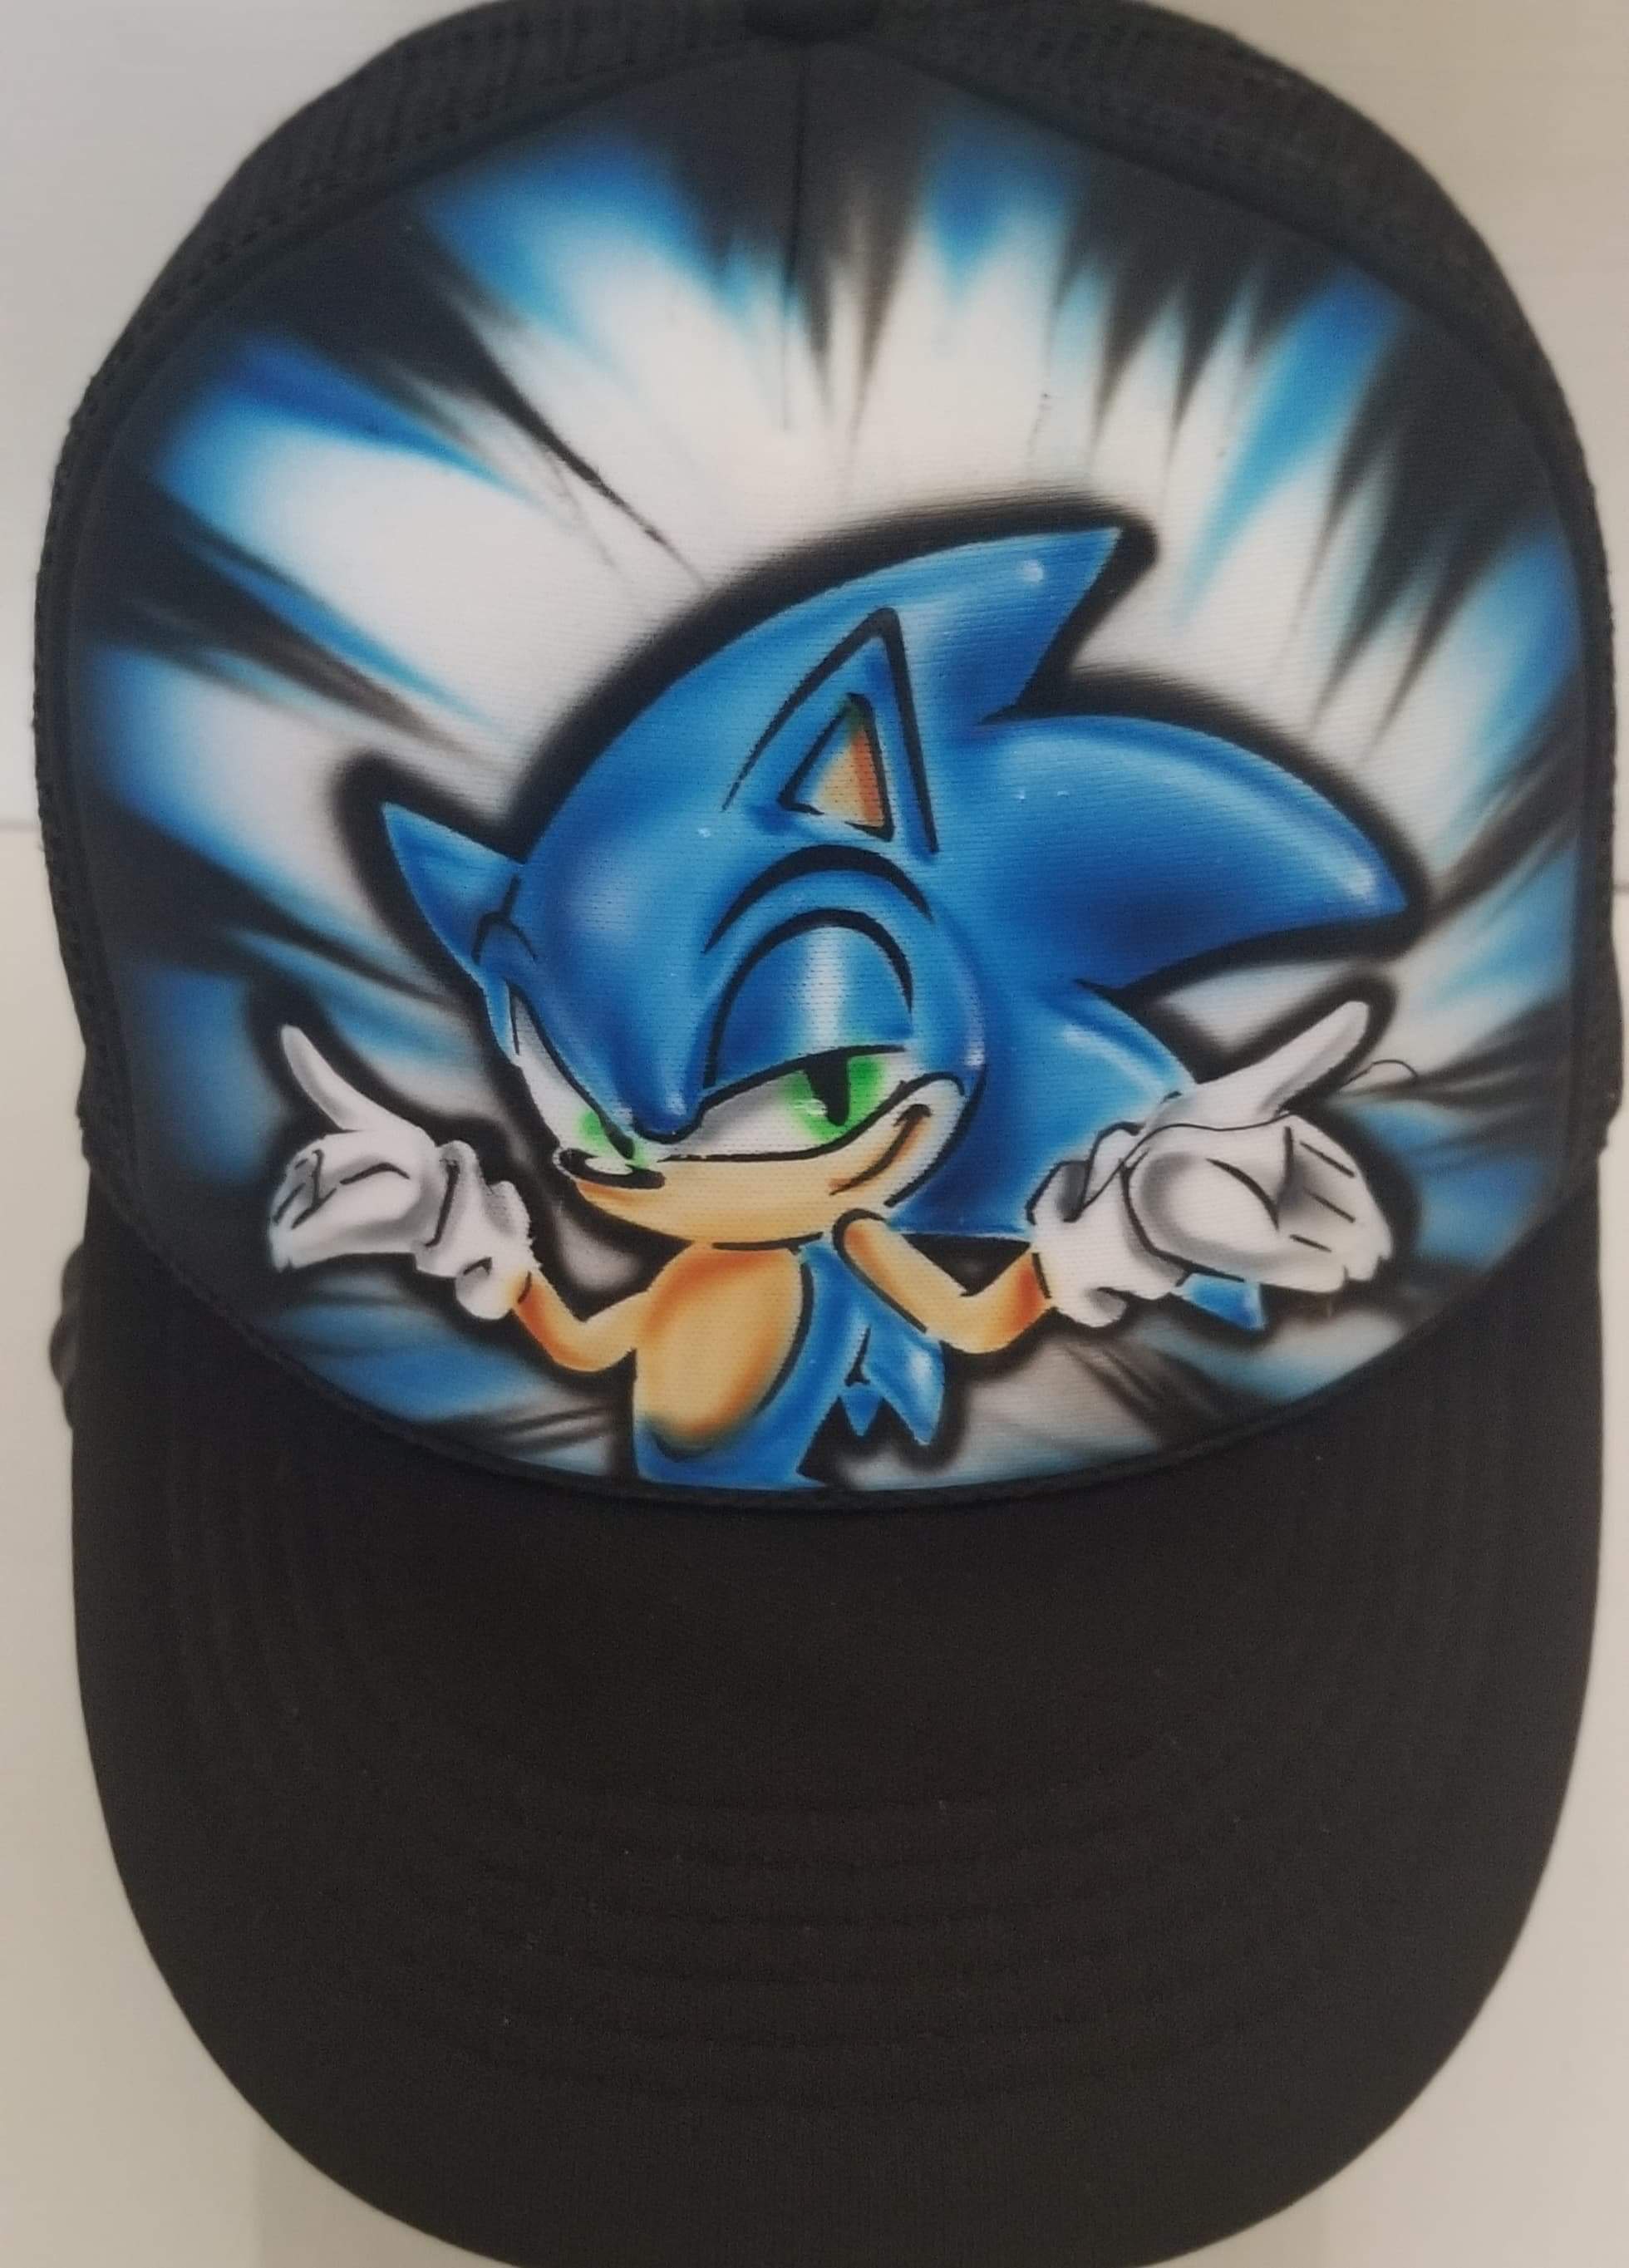 Classic Sonic Hat